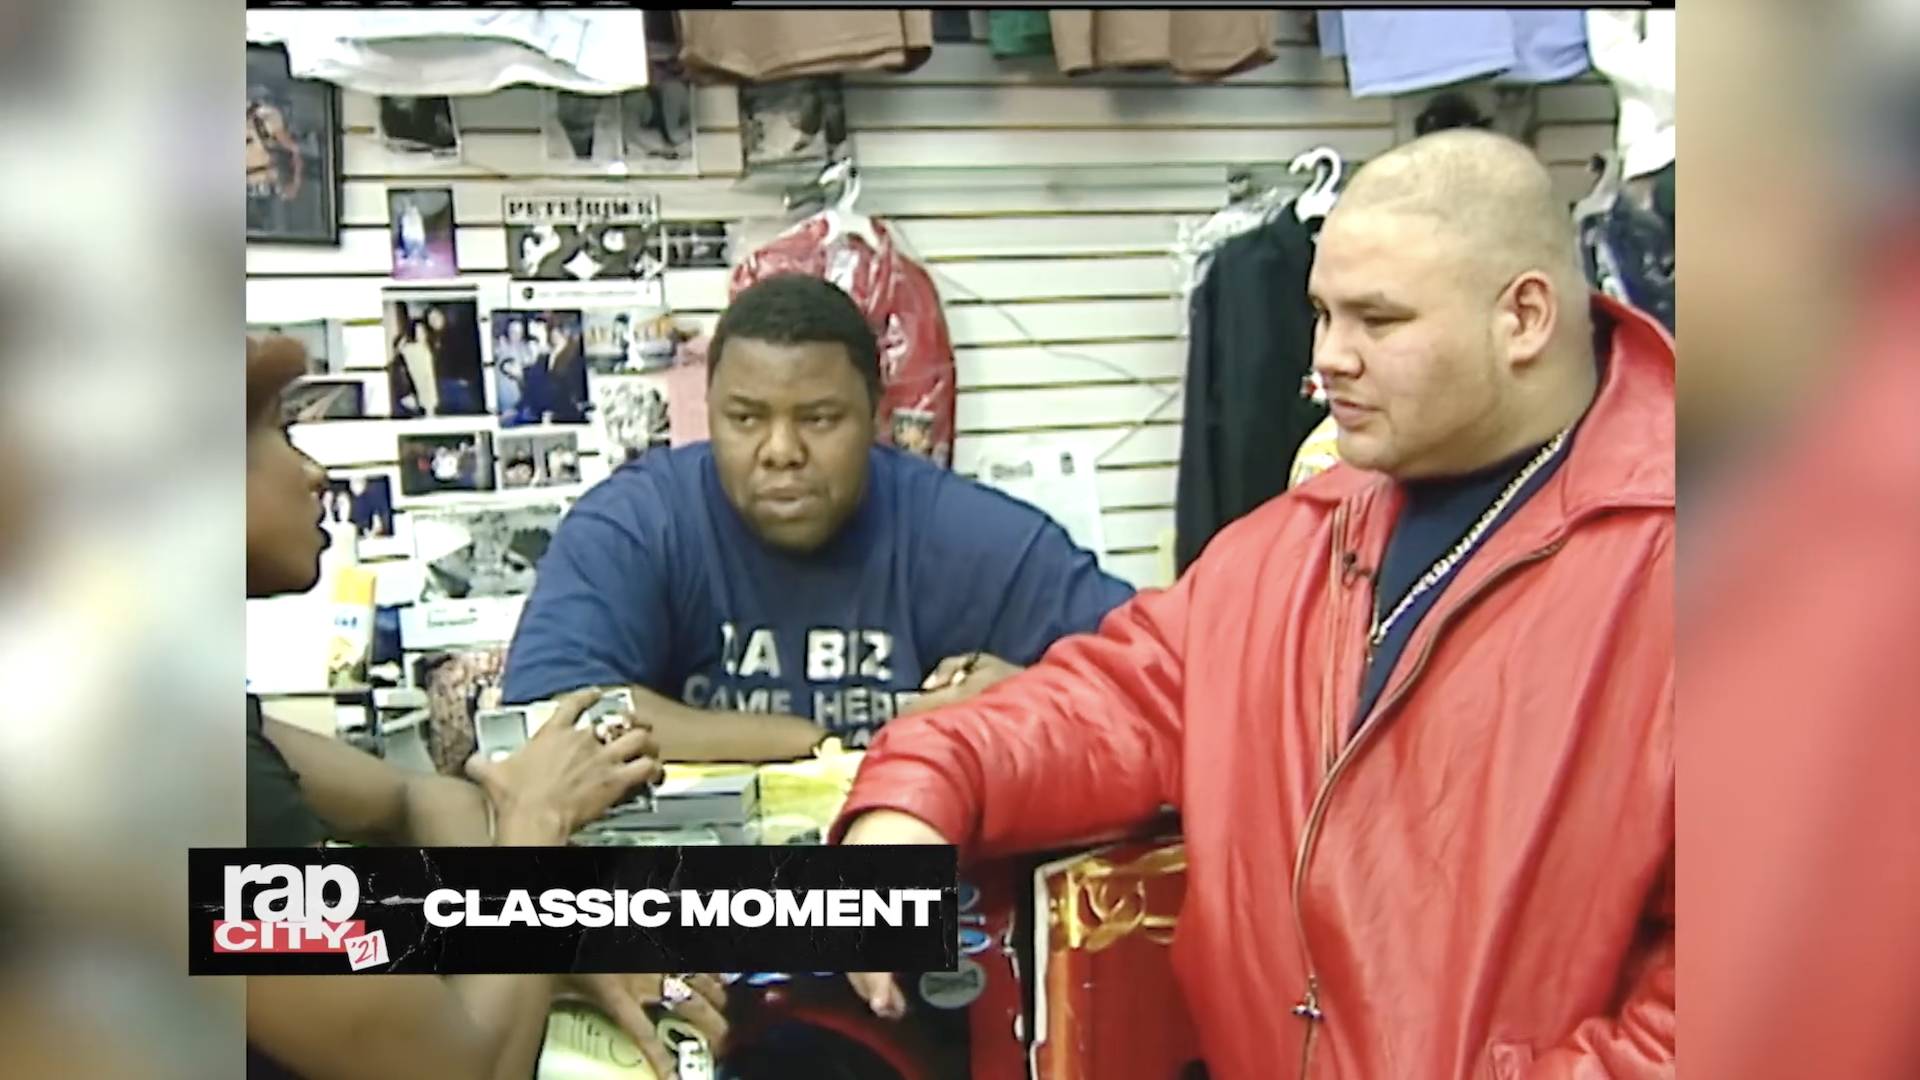 Classic clip of artists Biz Markie and Fat Joe.